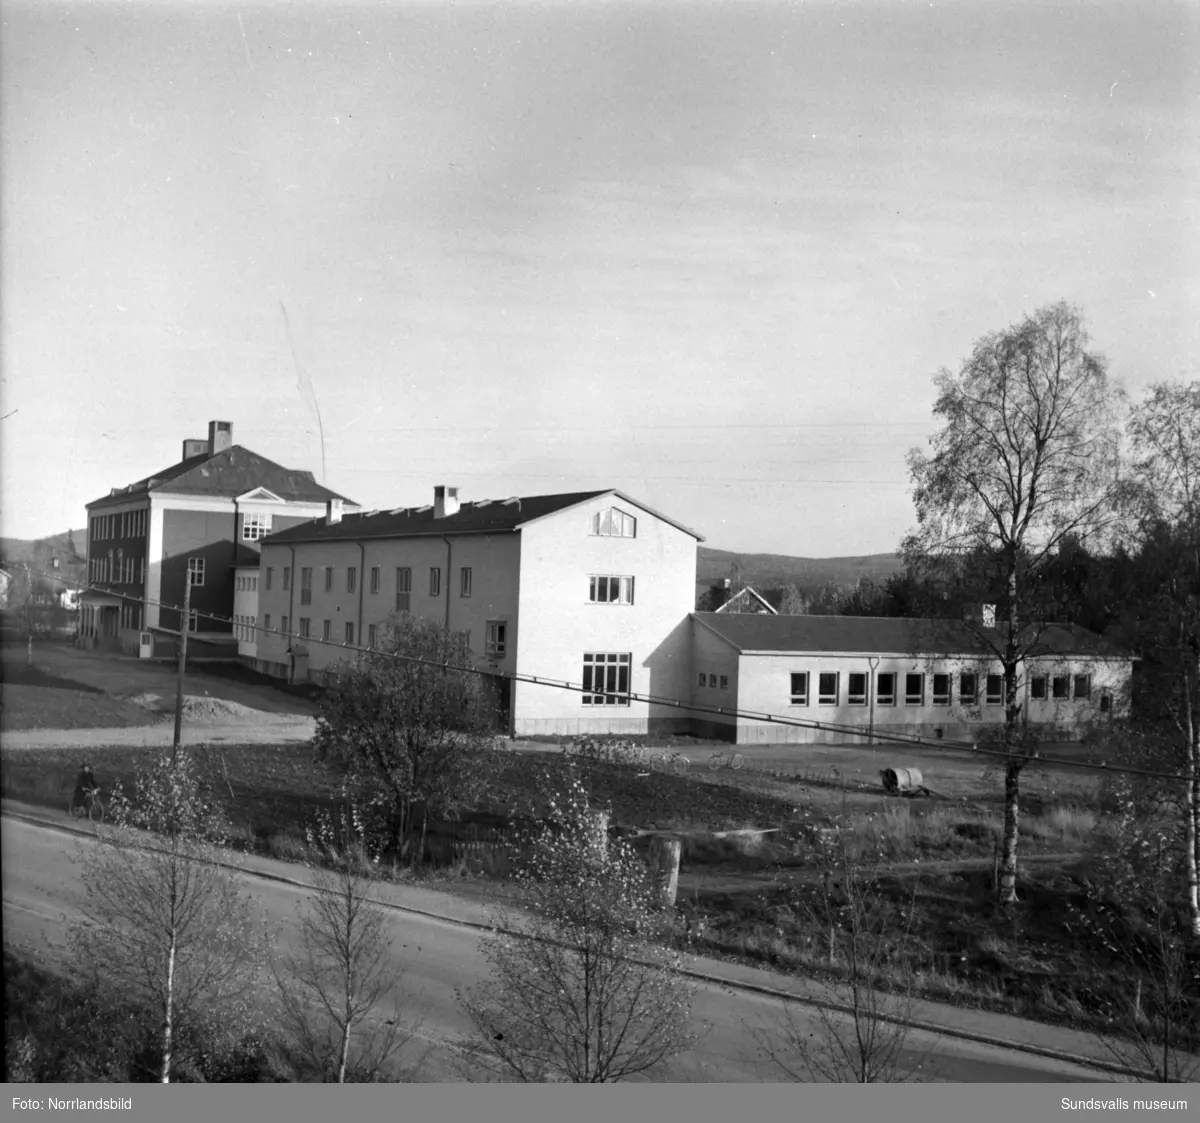 Bolbyskolan i Ånge, exteriörbilder.